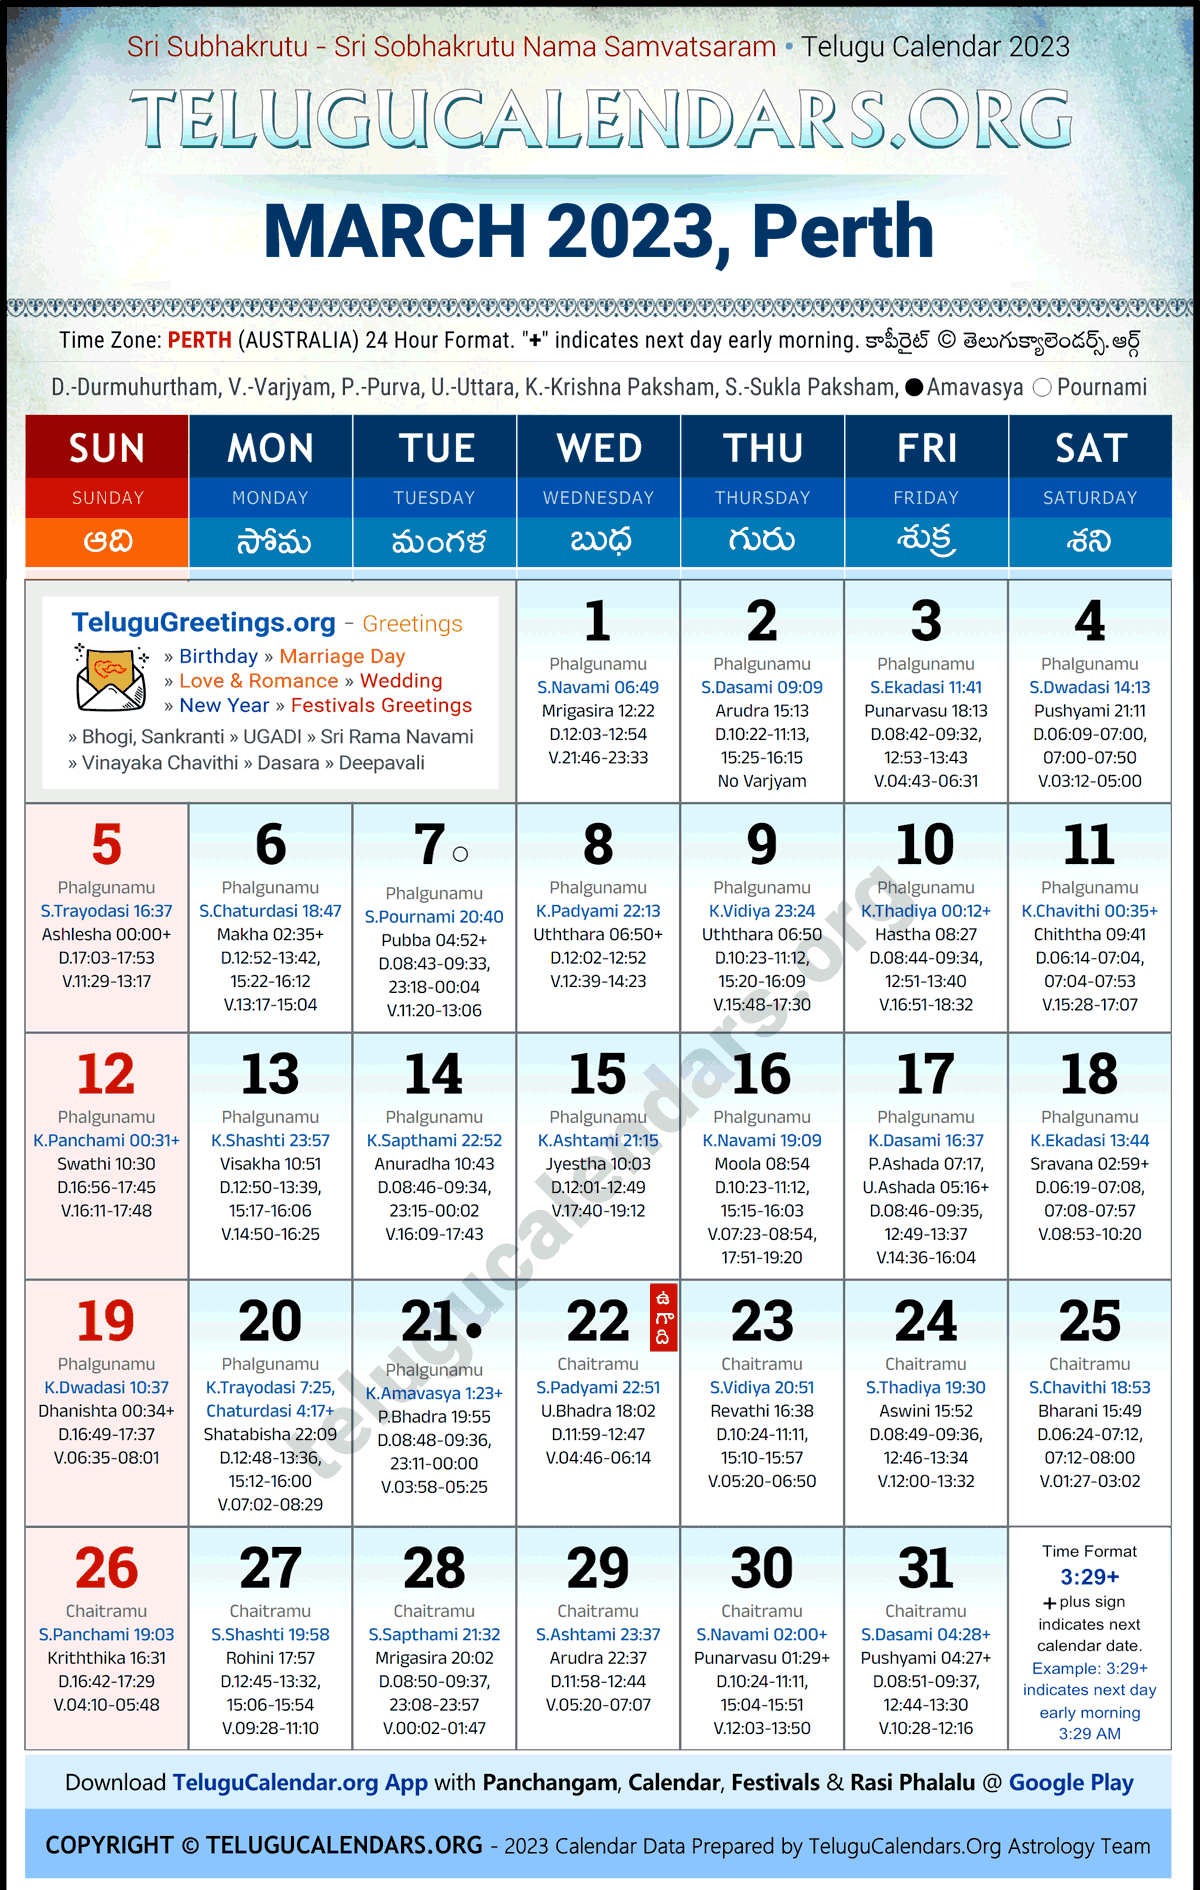 Telugu Calendar 2023 March Festivals for Perth